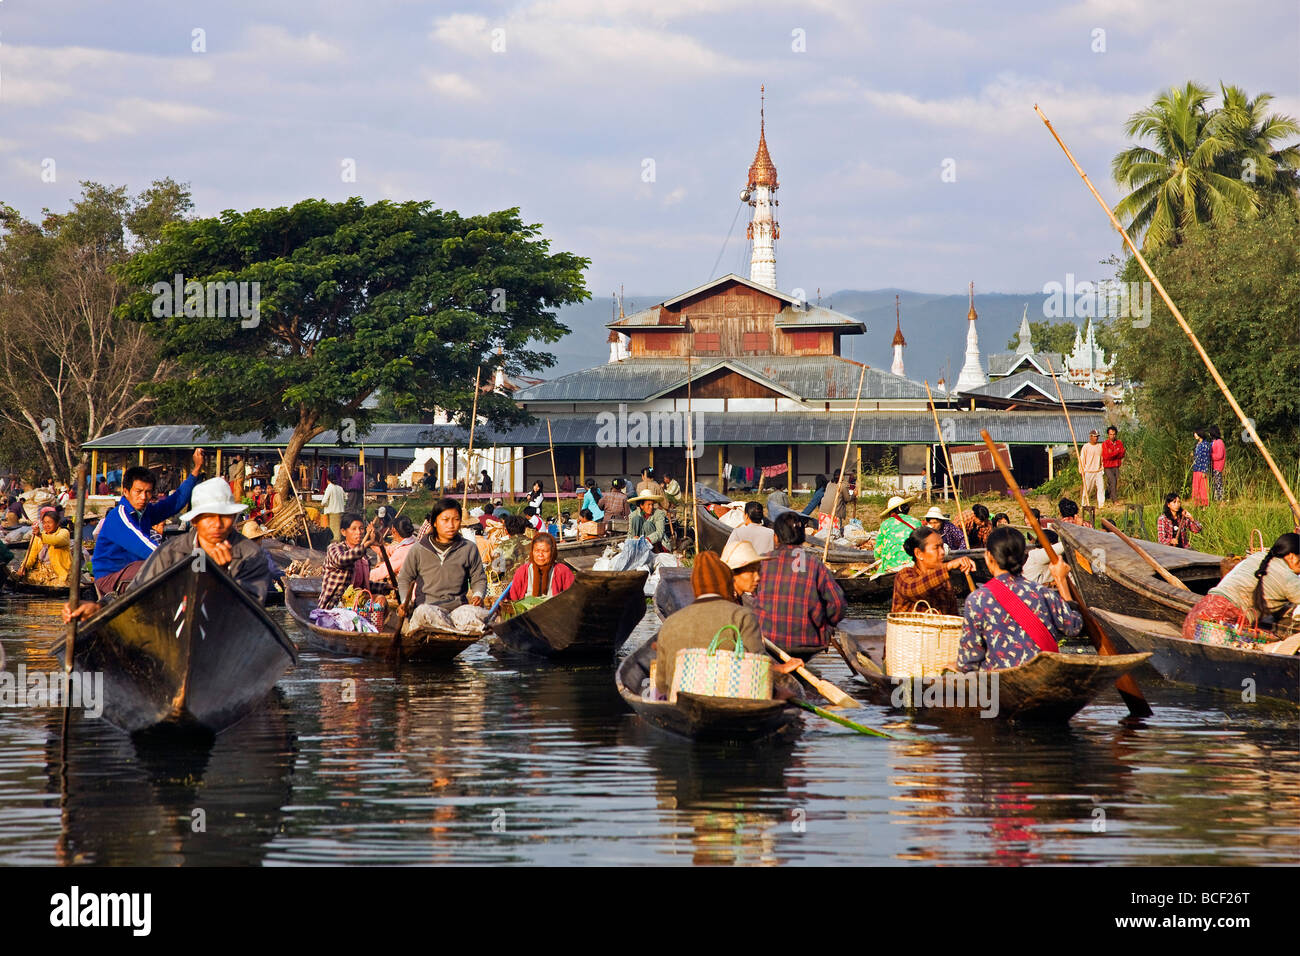 Myanmar. Burma. Lake Inle. The picturesque floating market of Ywa-ma on Lake Inle. Stock Photo